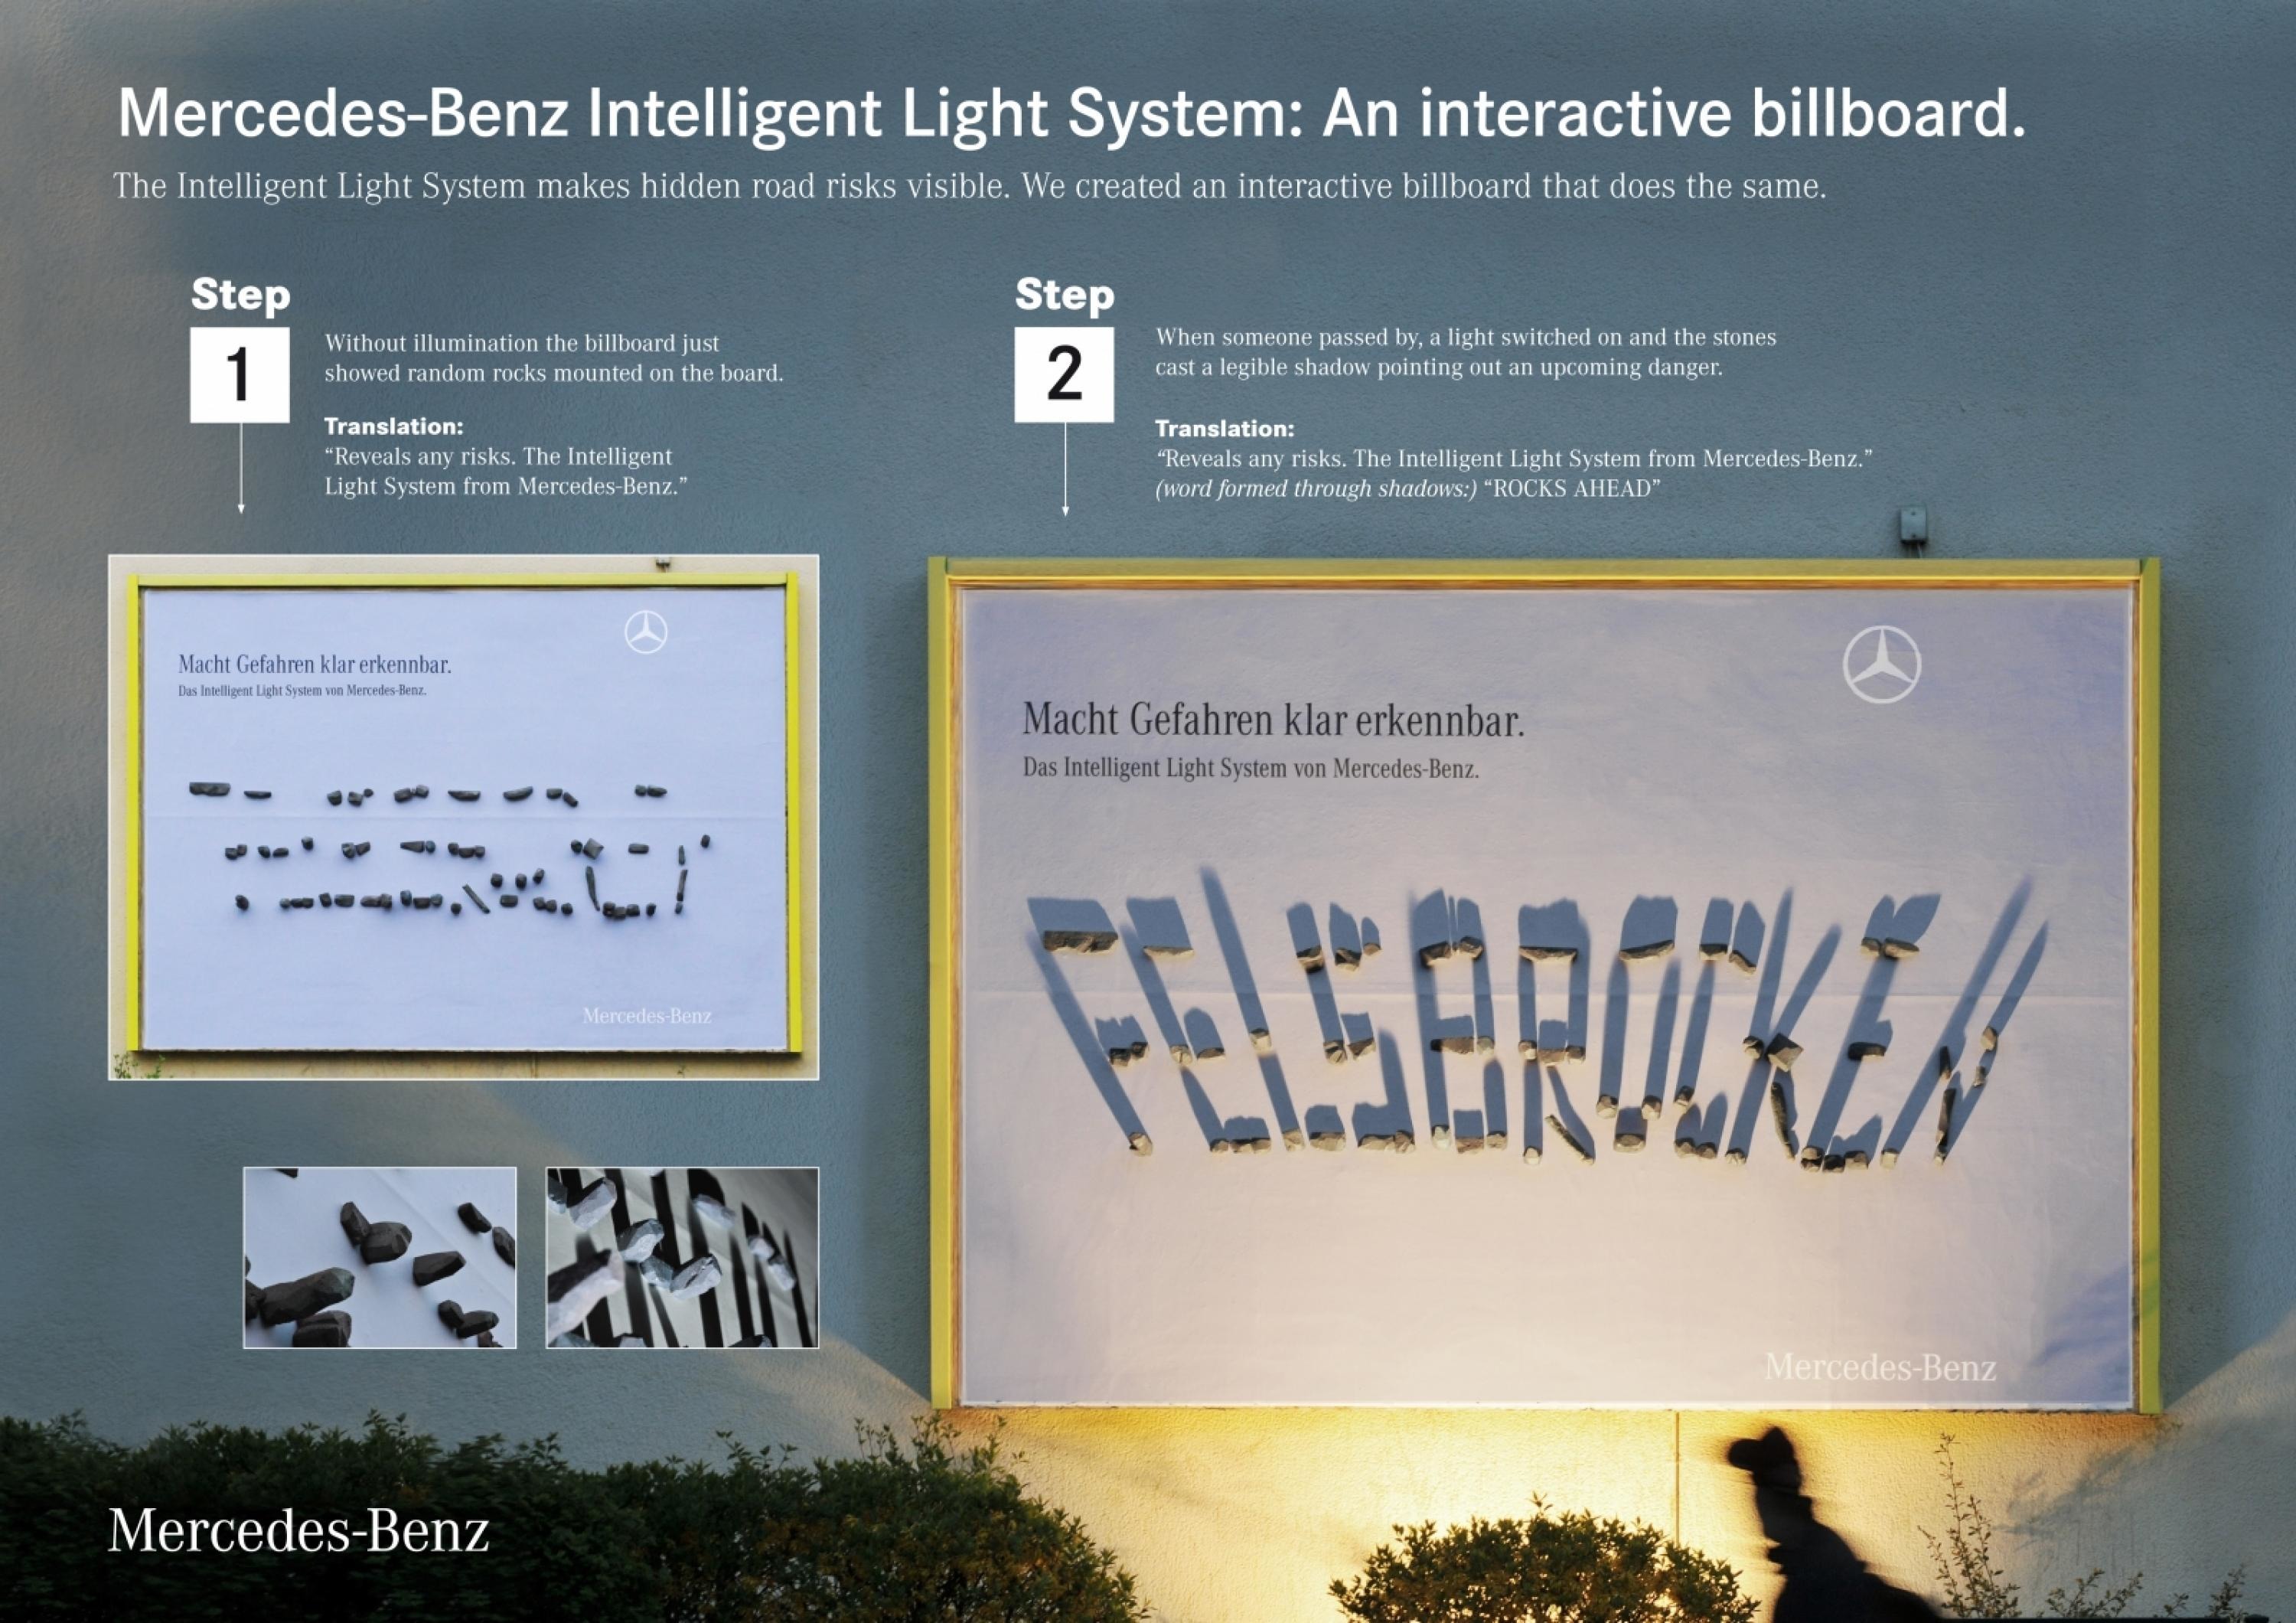 MERCEDES-BENZ INTELLIGENT LIGHT SYSTEM